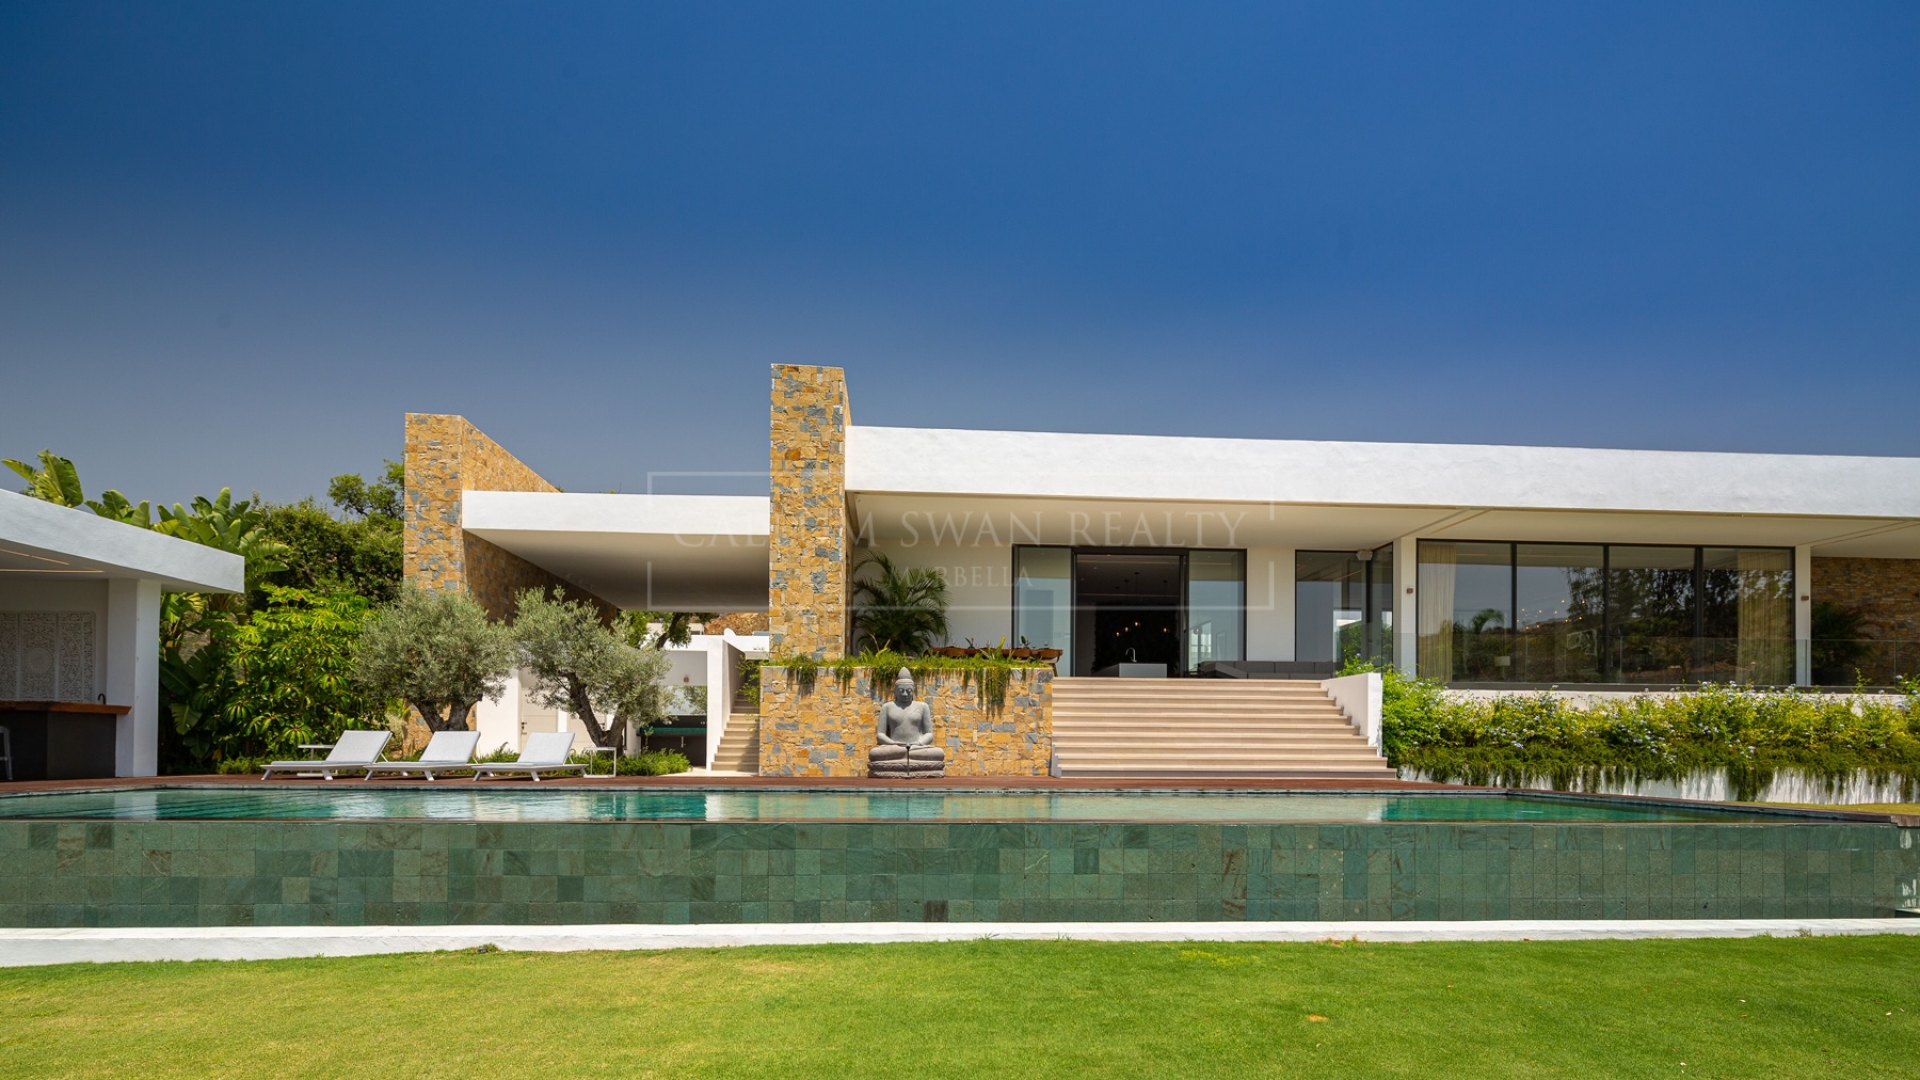 Impressive luxury villa in Marbella Club Golf Resort